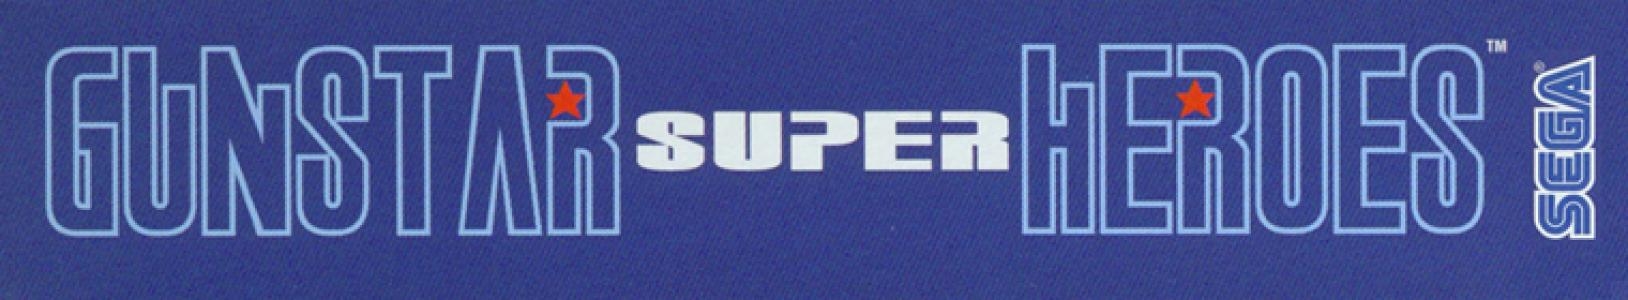 Gunstar Super Heroes banner